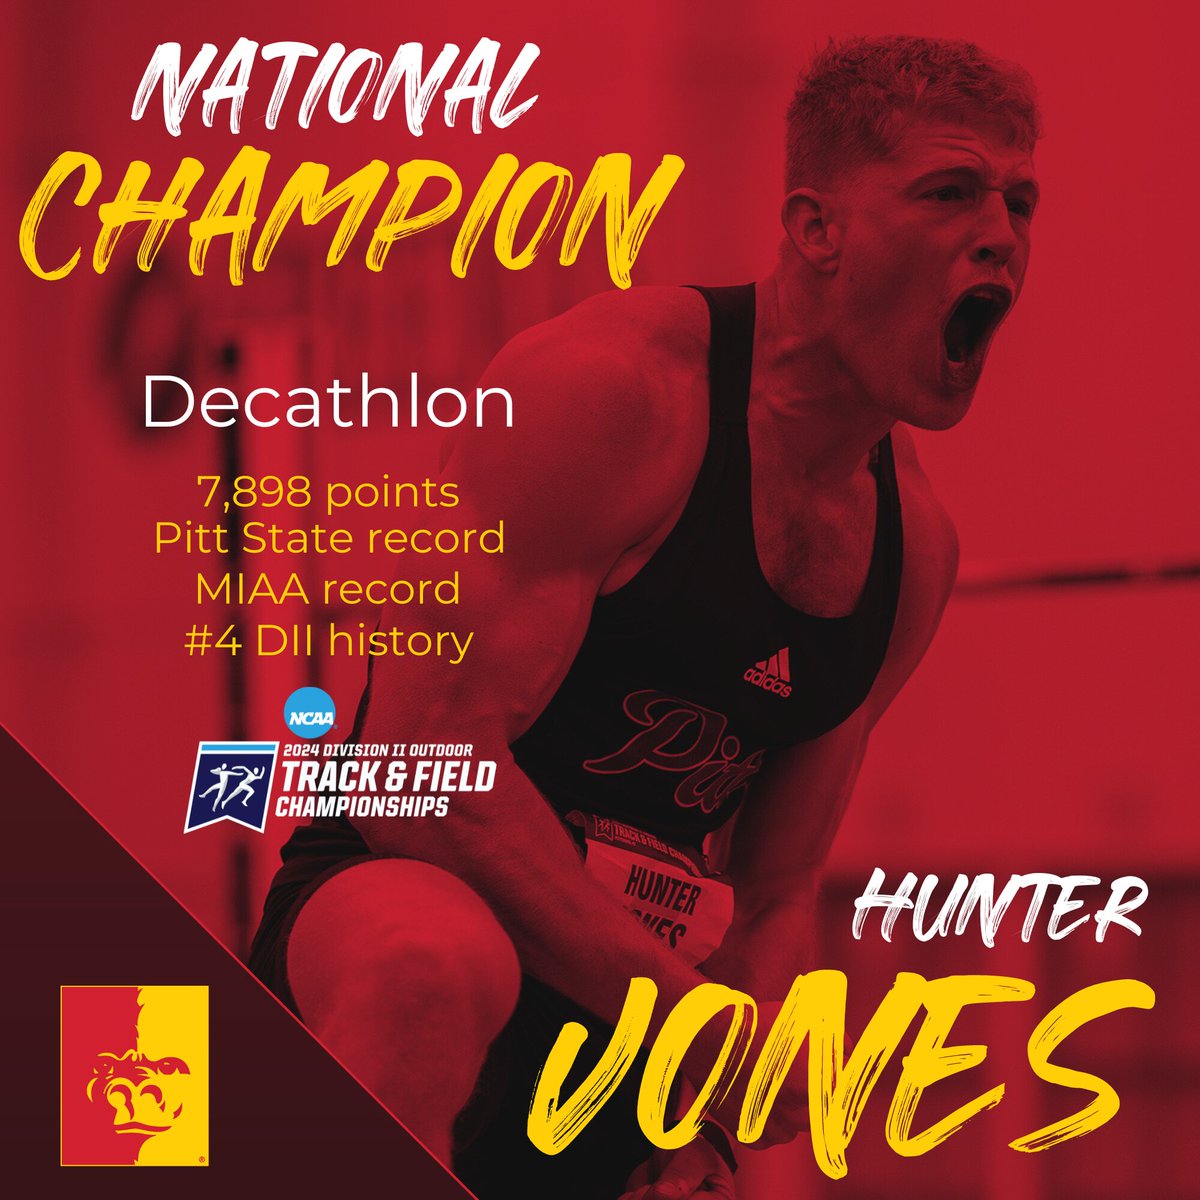 NATIONAL CHAMPION‼️ Hunter Jones claims the decathlon national championship in RECORD BREAKING fashion 🦍💪 @GorillasTrack|@pittstate